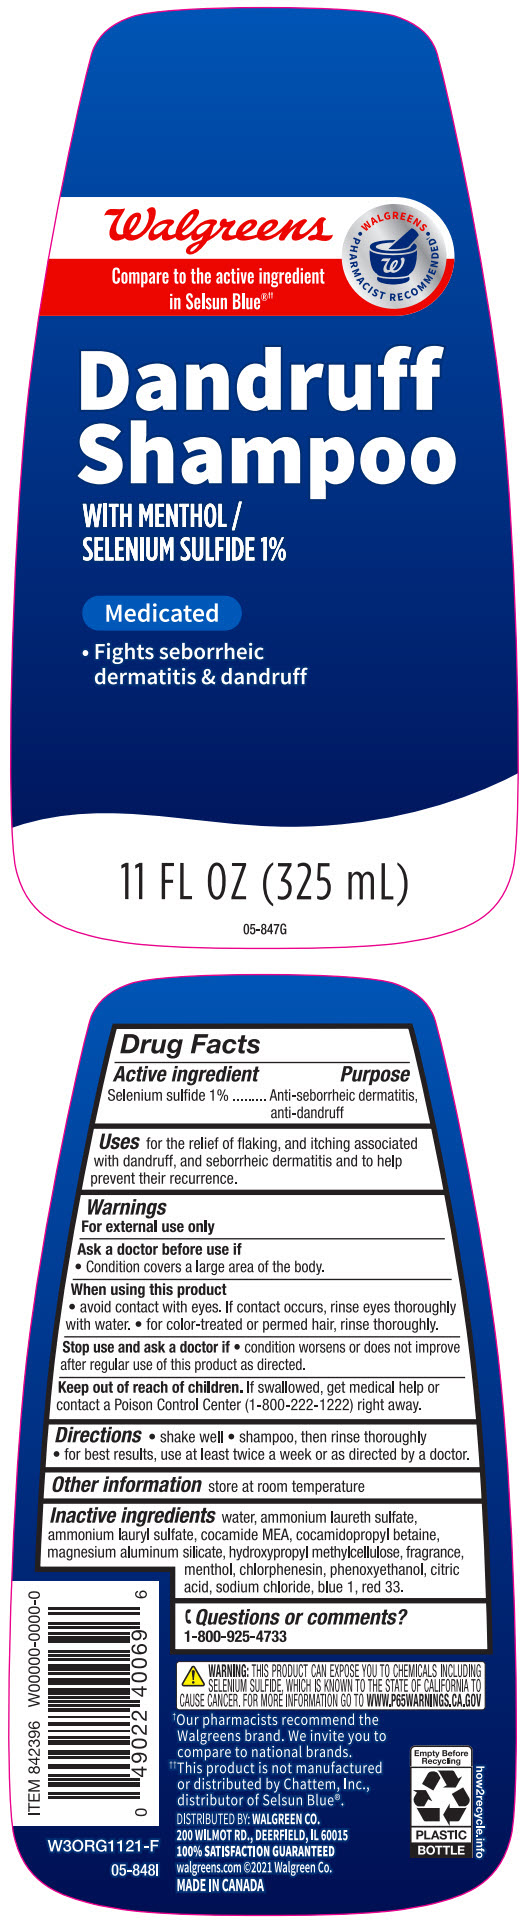 PRINCIPAL DISPLAY PANEL - 325 mL Bottle Label